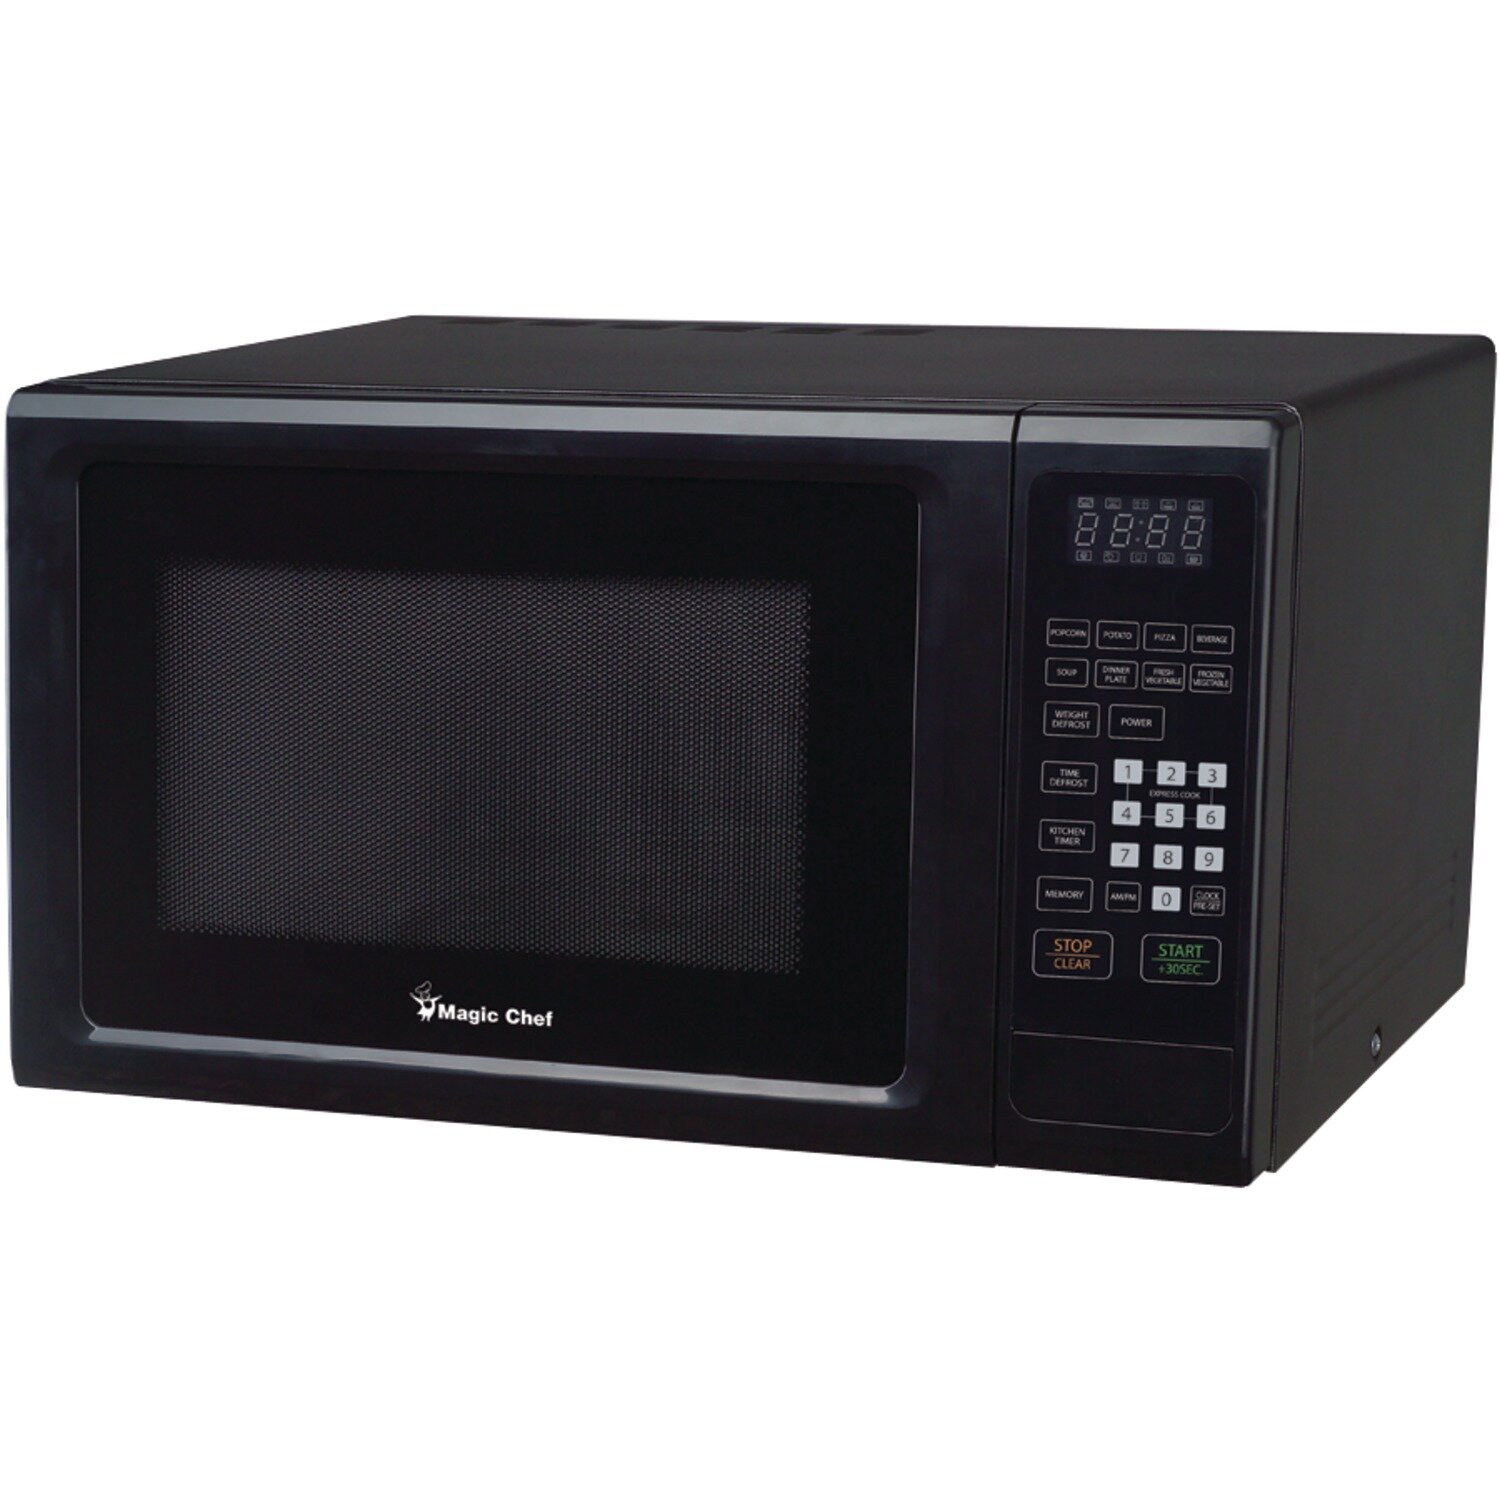 Magic Chef 20 1 1 Cu Ft Countertop Microwave Reviews Wayfair